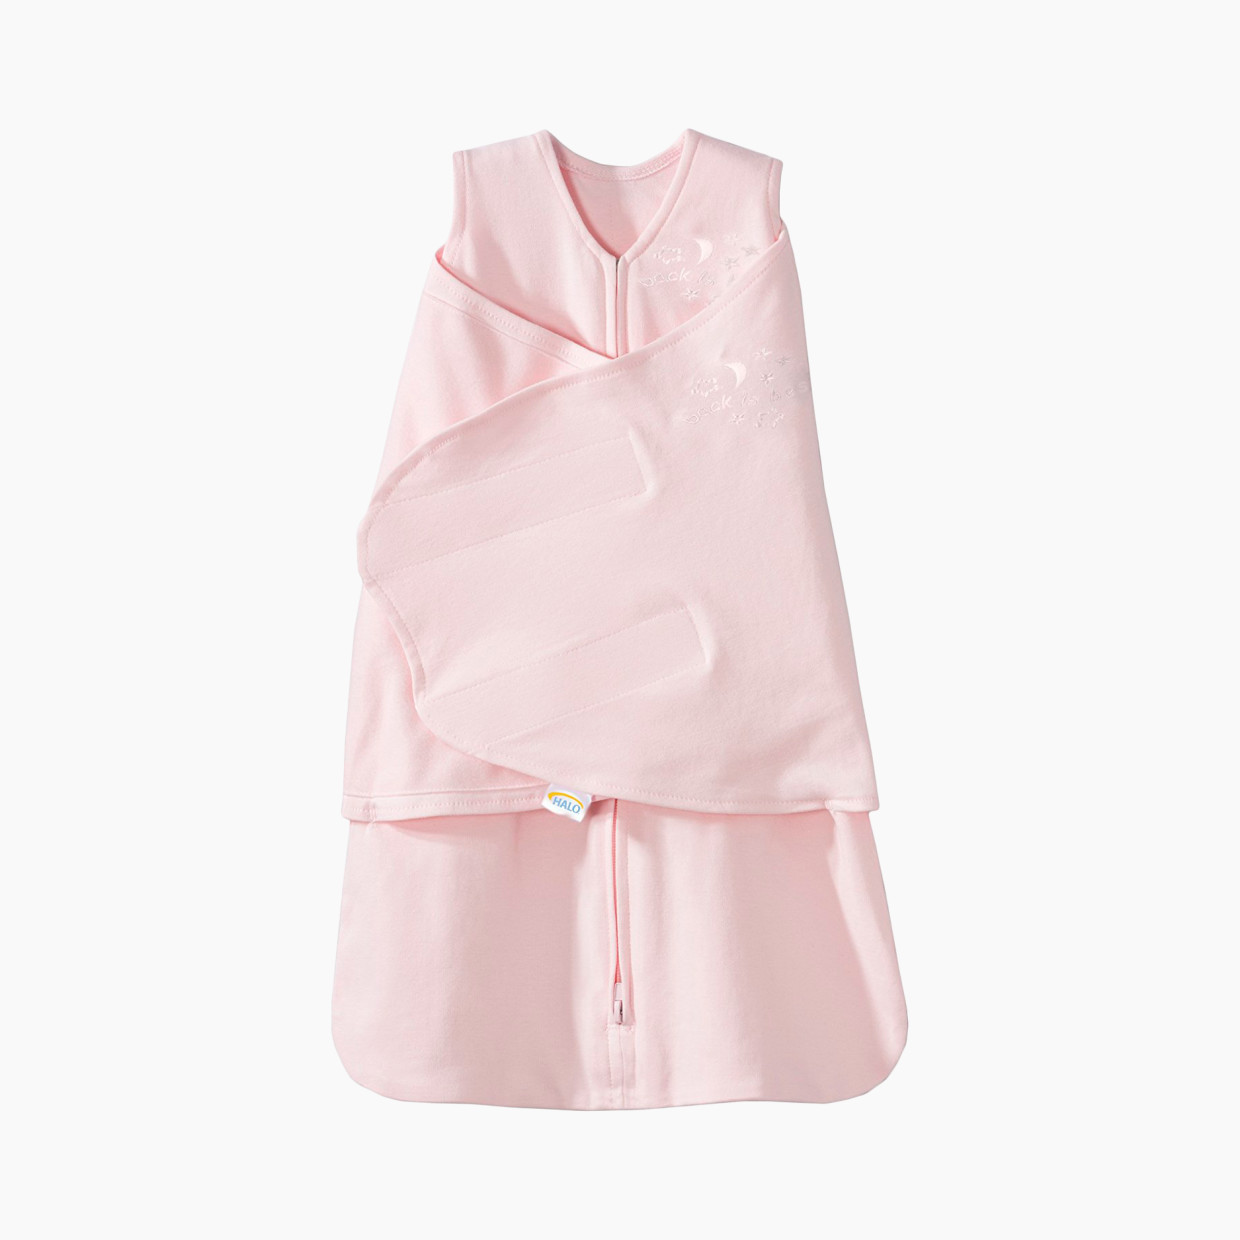 Halo SleepSack Swaddle cotton - Pink, Newborn.